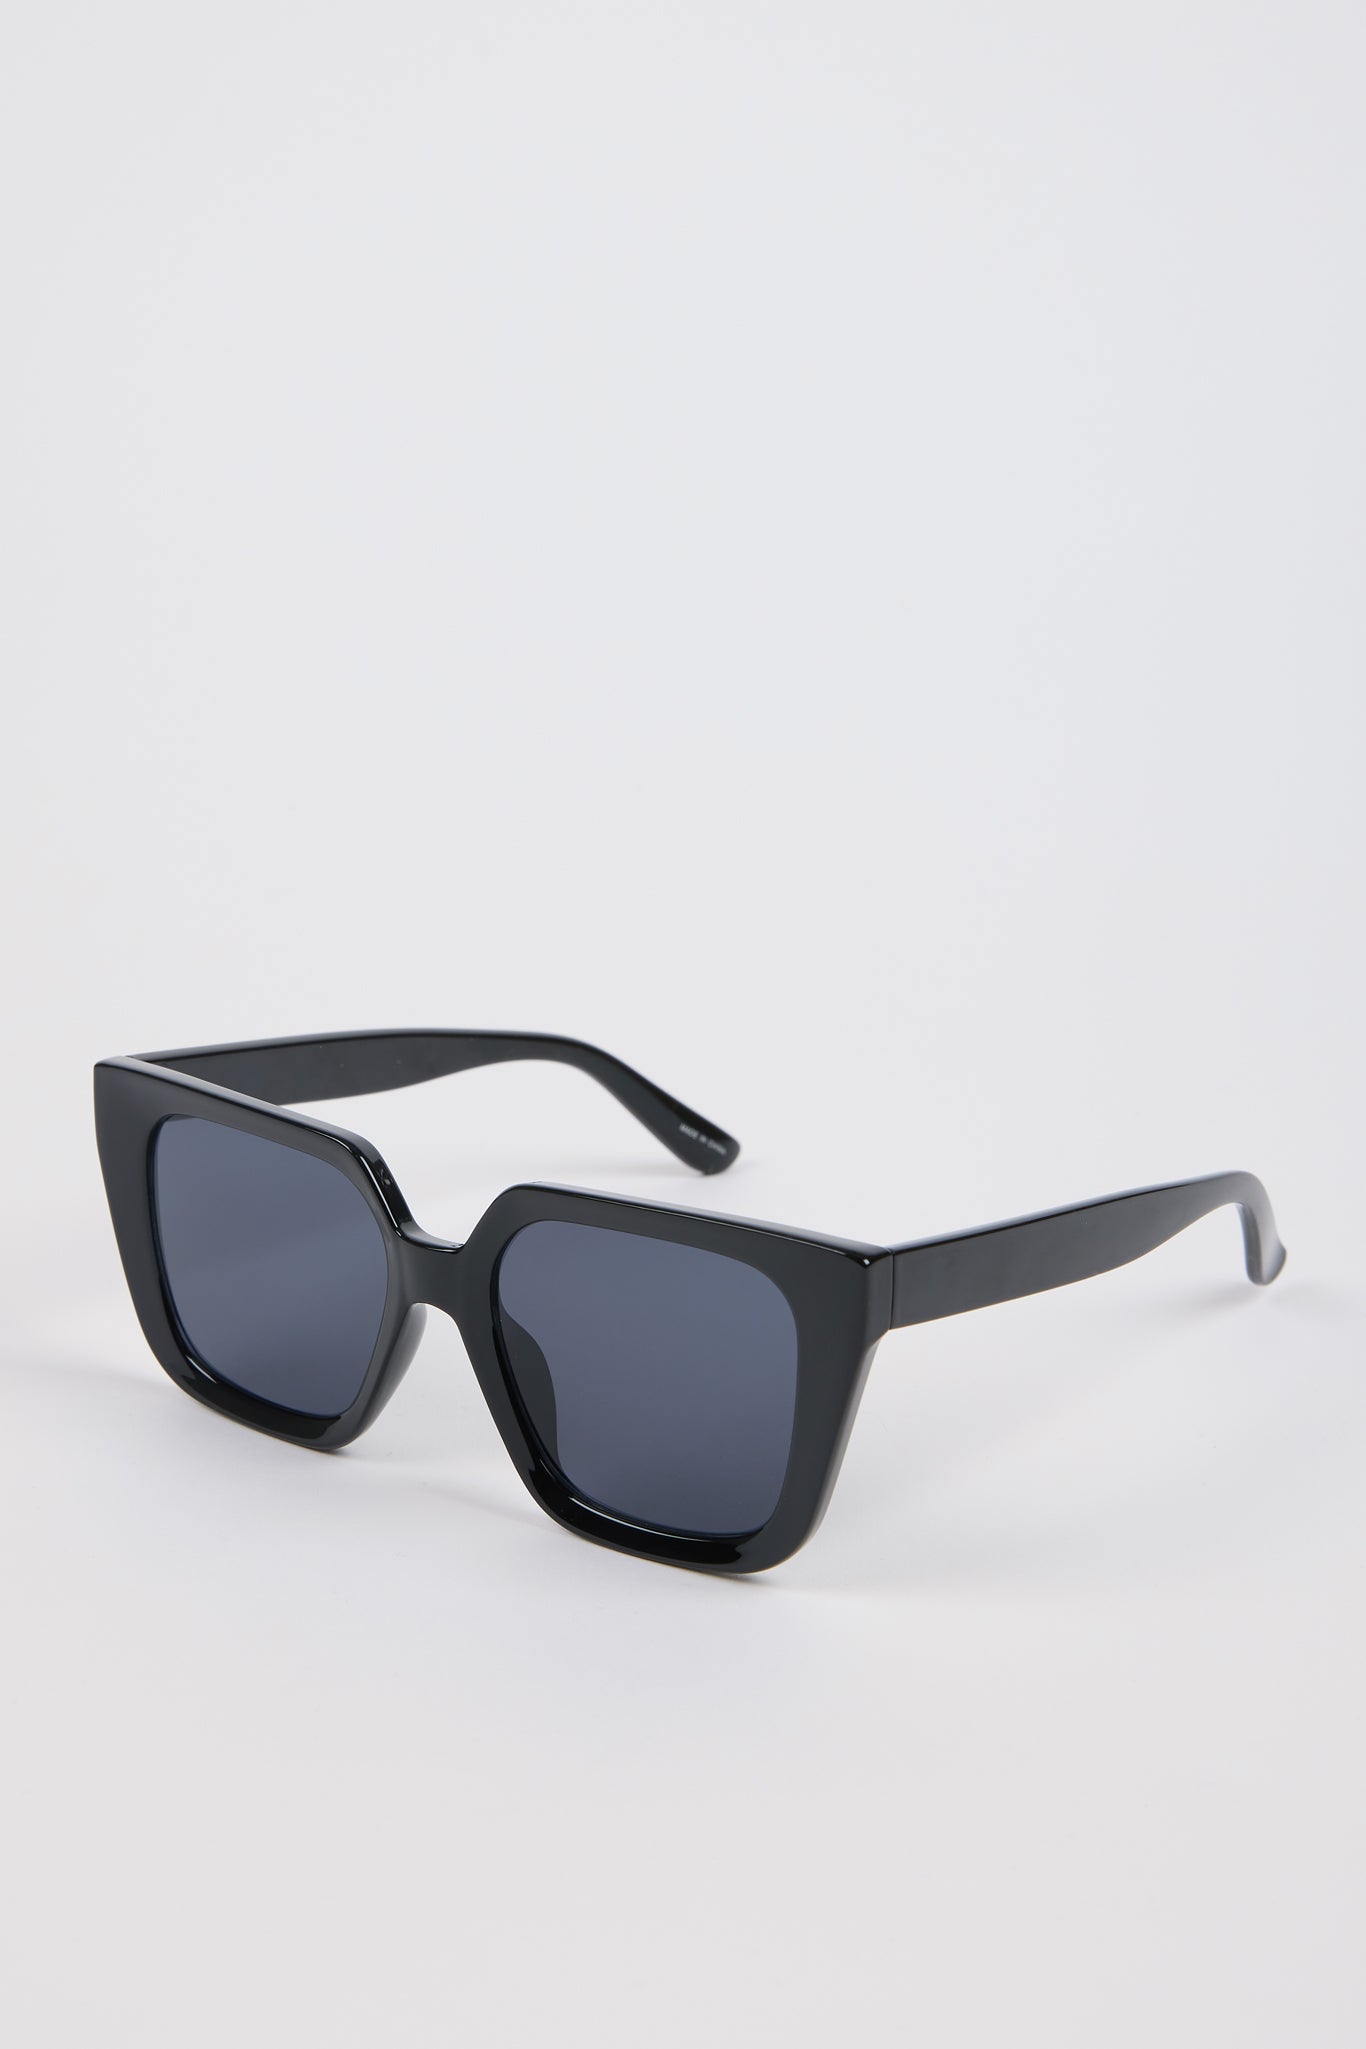 Black sharp thick square sunglasses